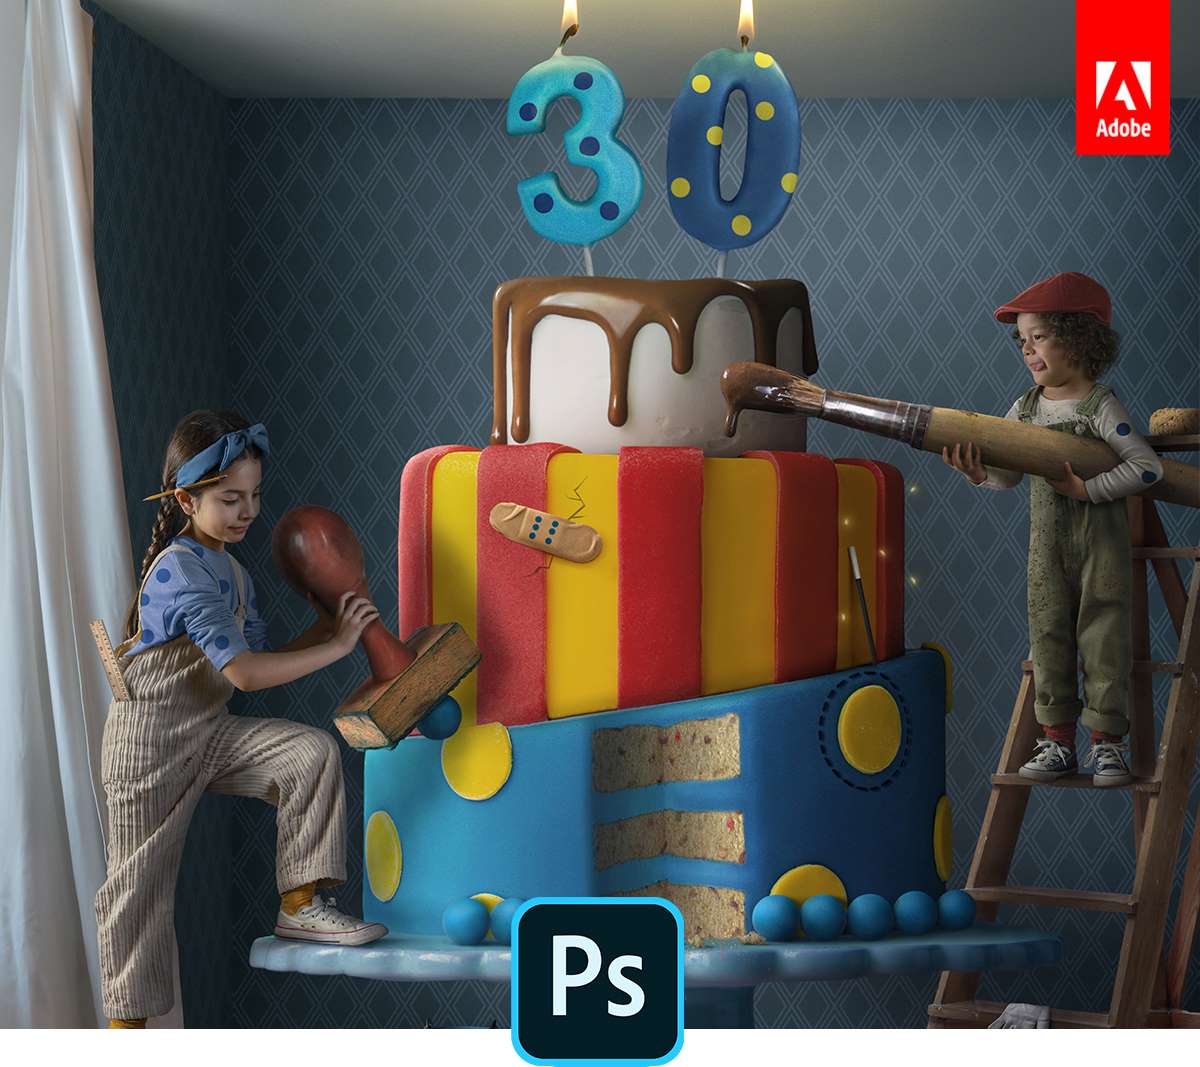 Adobe Photoshop ครบรอบ 30 ปี! เปิดตัวความสามารถใหม่ของ Content-Aware Fill, Lens Blur, Type, Selections ให้ใช้ง่ายขึ้น